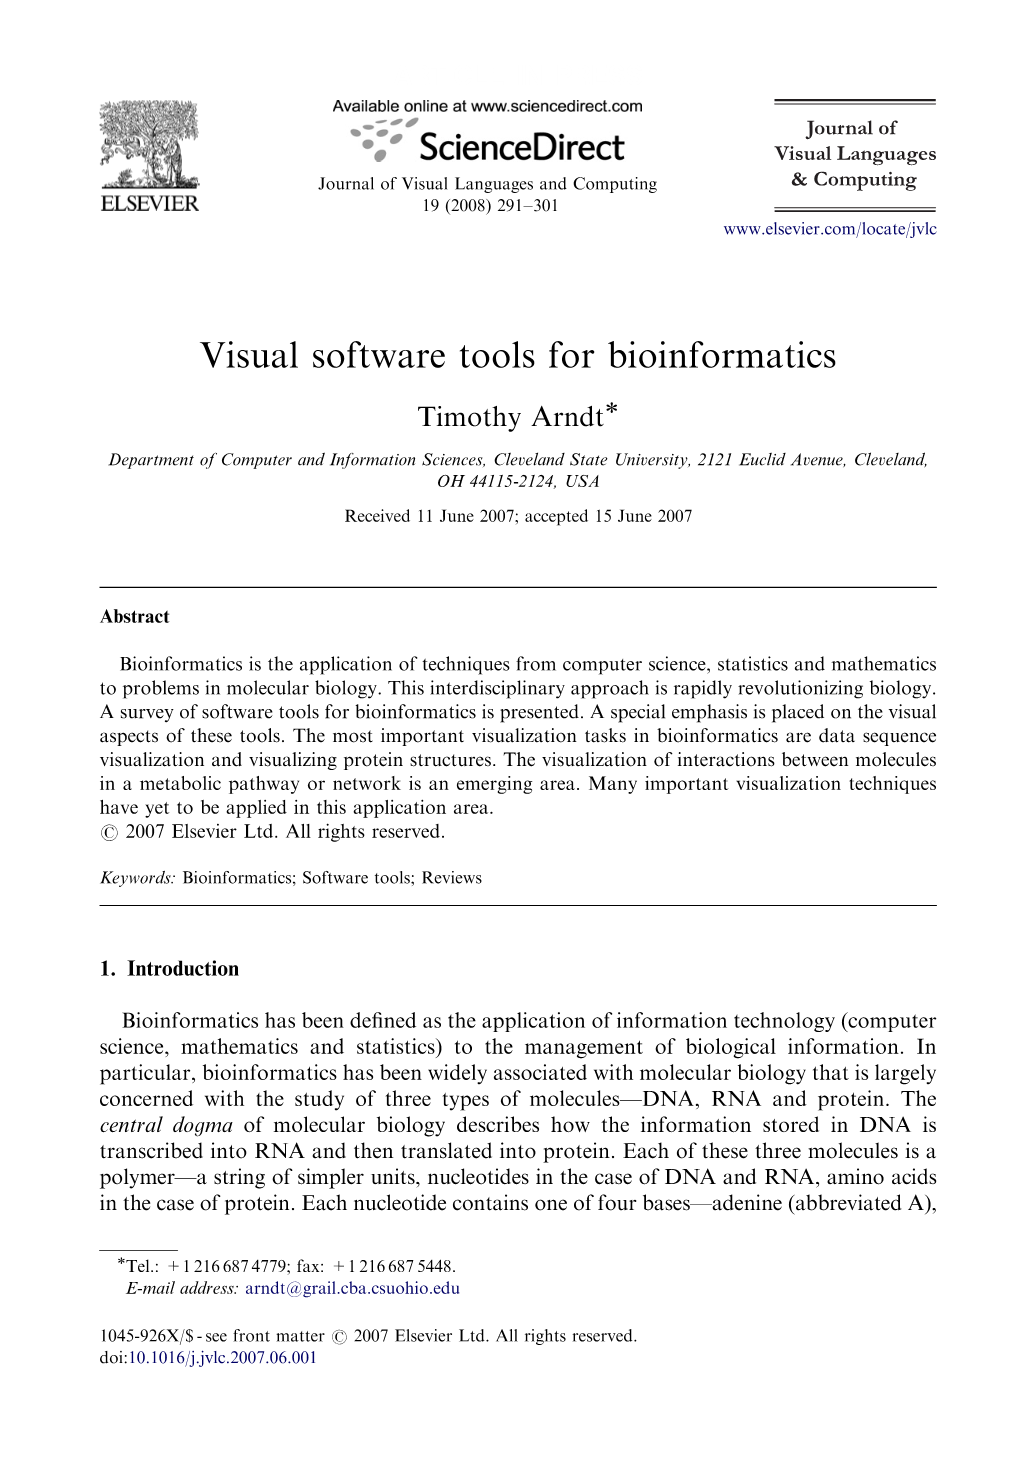 Visual Software Tools for Bioinformatics